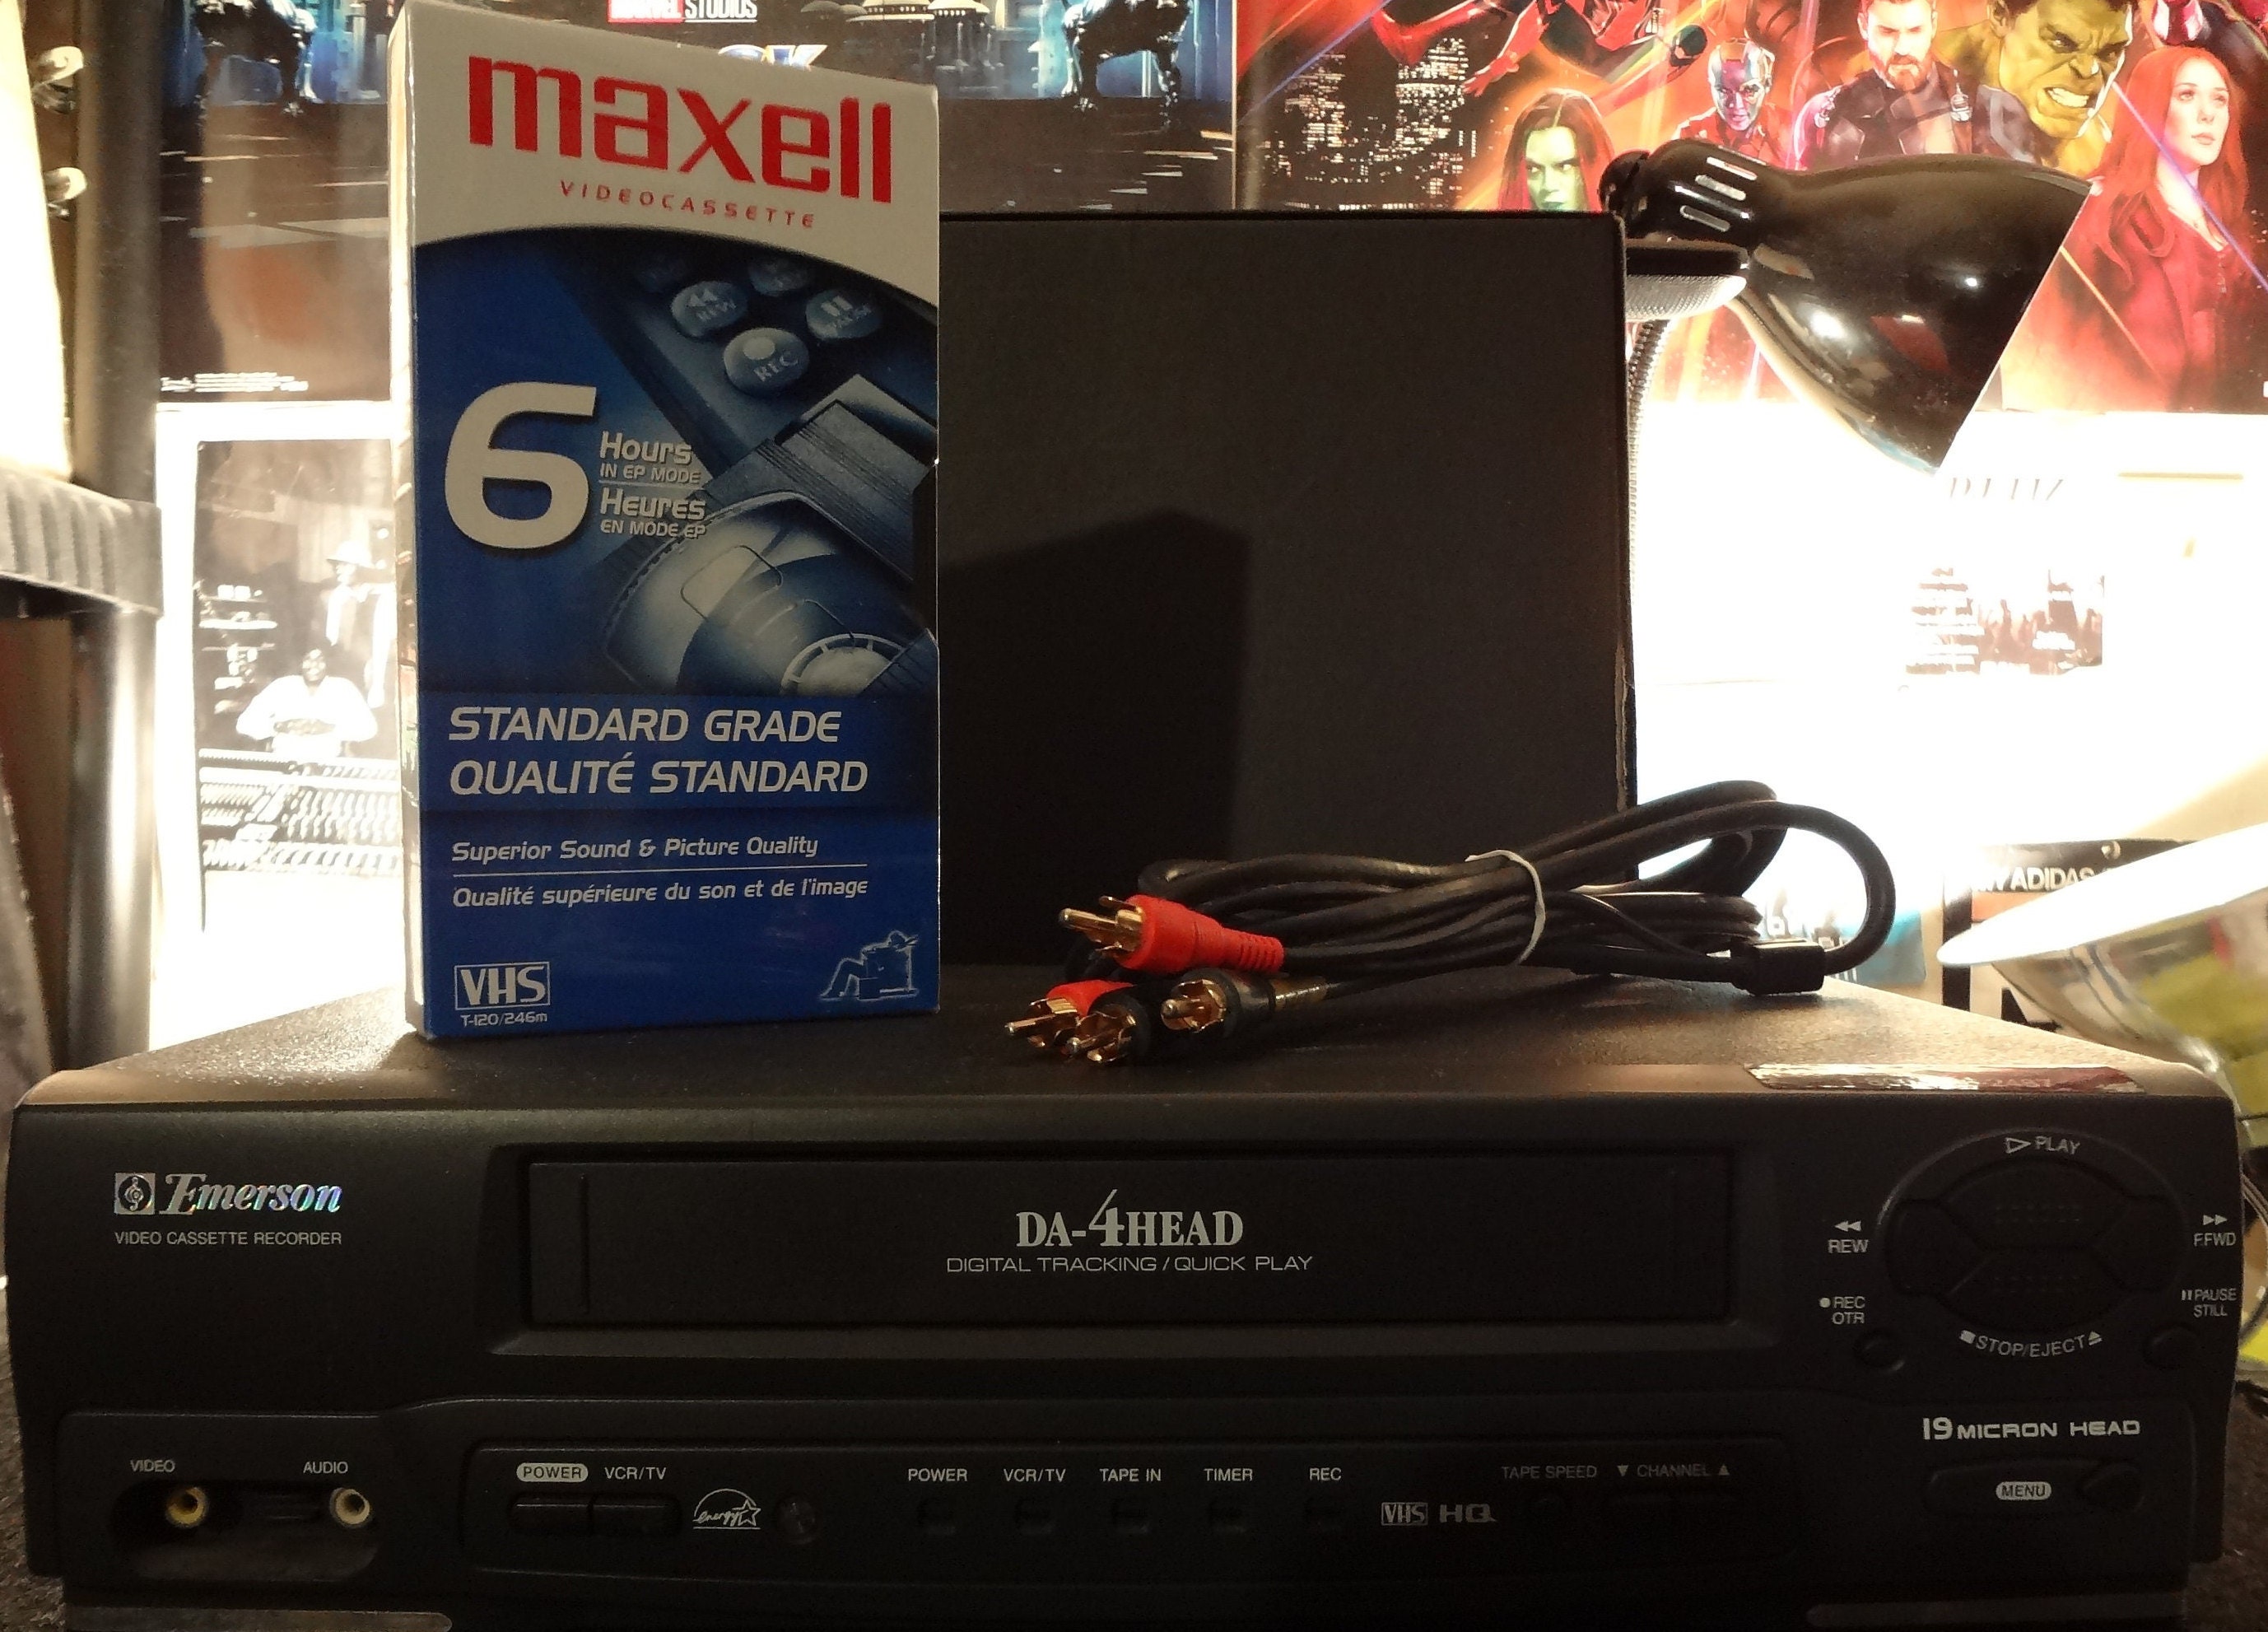 Emerson EWV401A Video Cassette Recorder Player Da-4 head Digital Tracking Quick Play VCR 